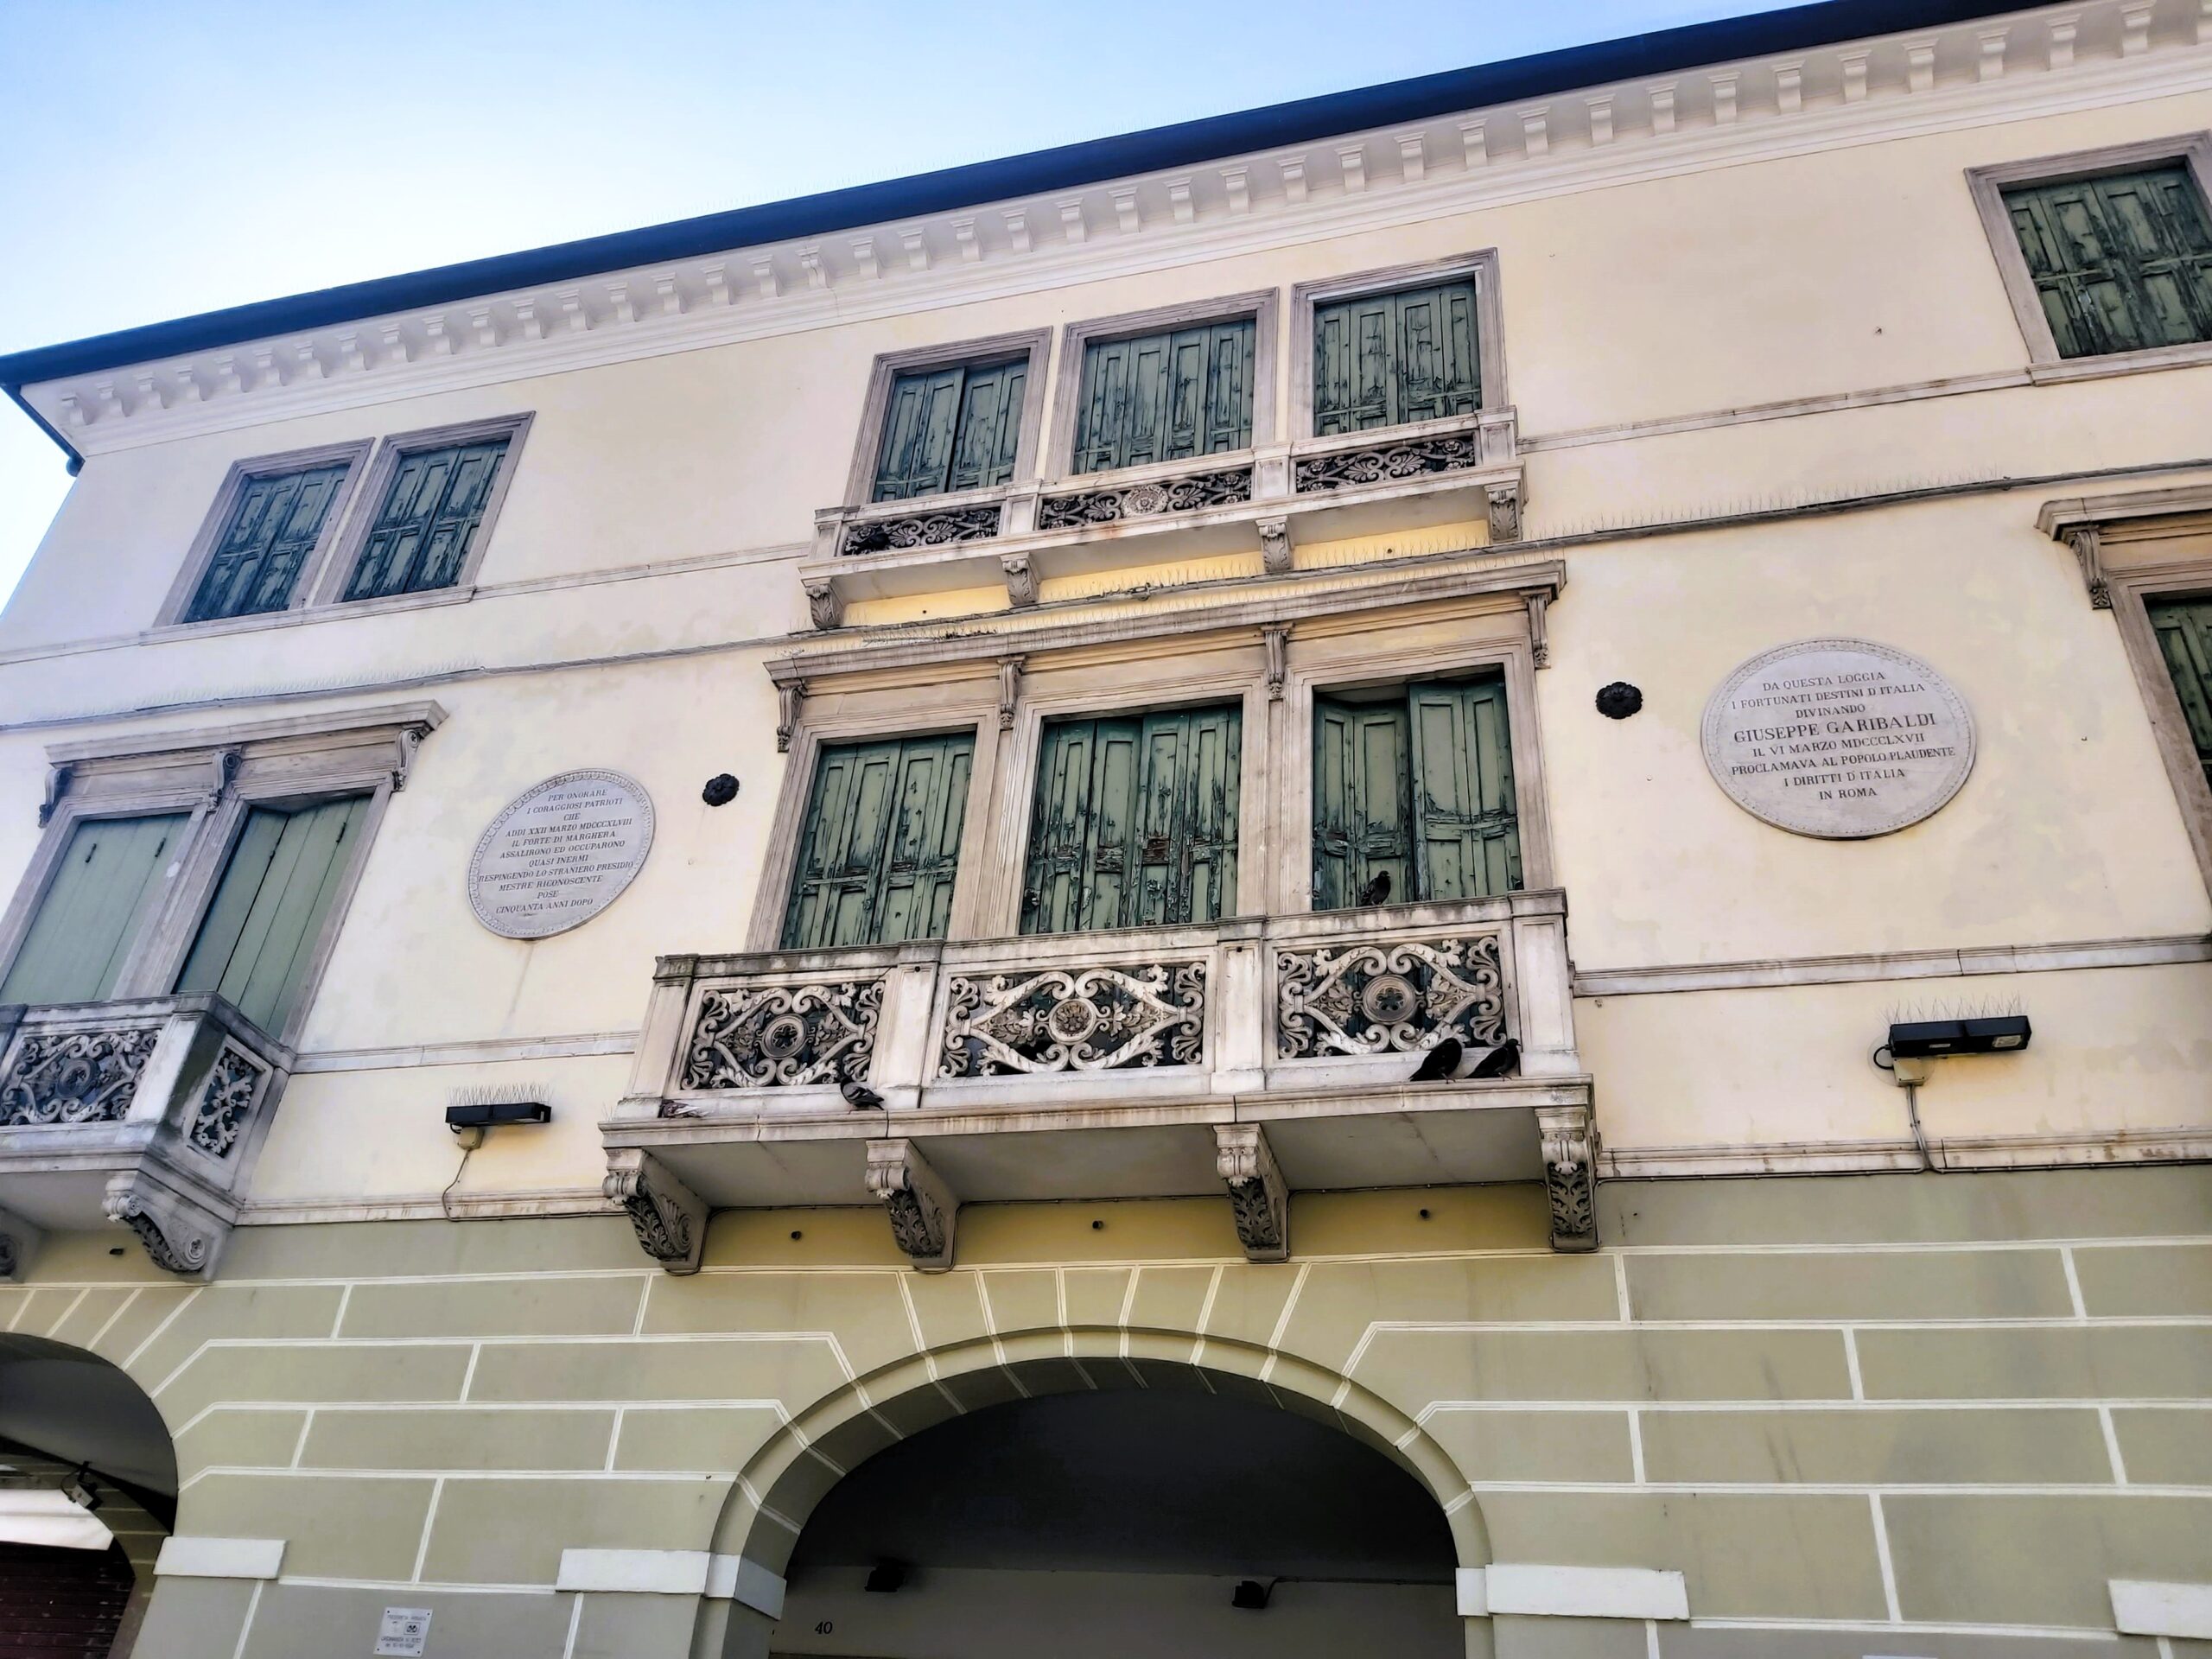 Giuseppe Garibaldi plaque on old building in Mestre, Italy